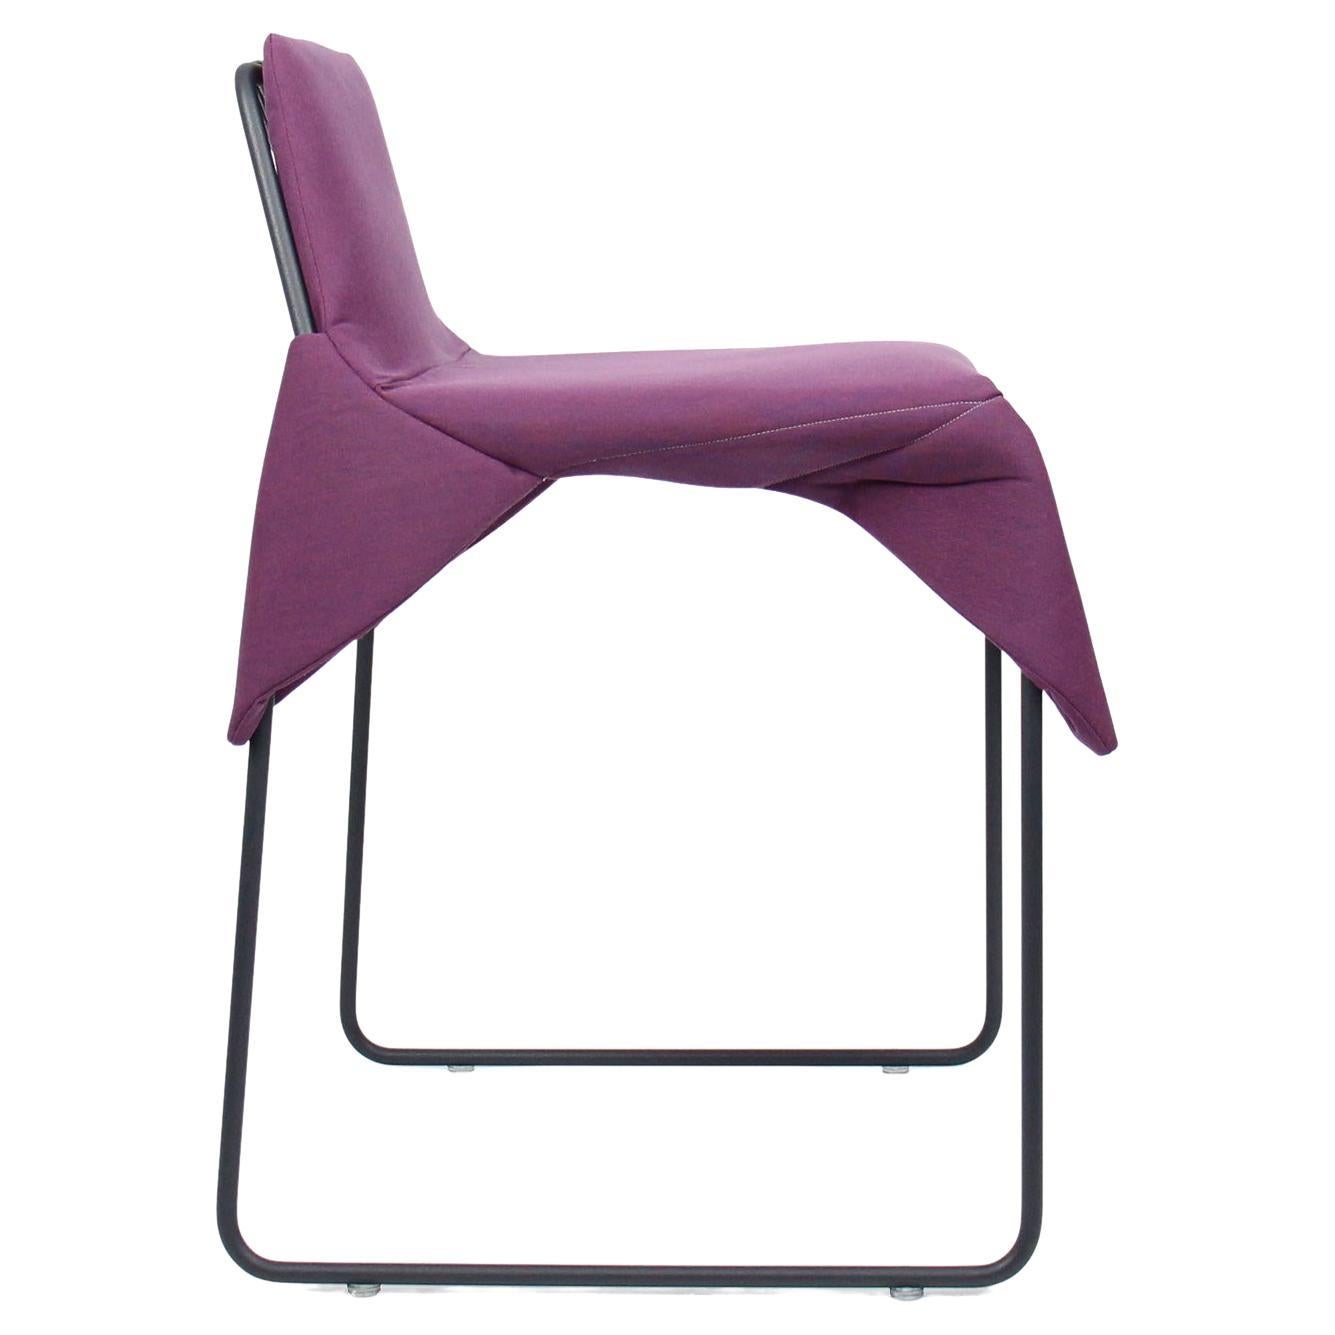 Merkled Net Wrap Chair For Sale